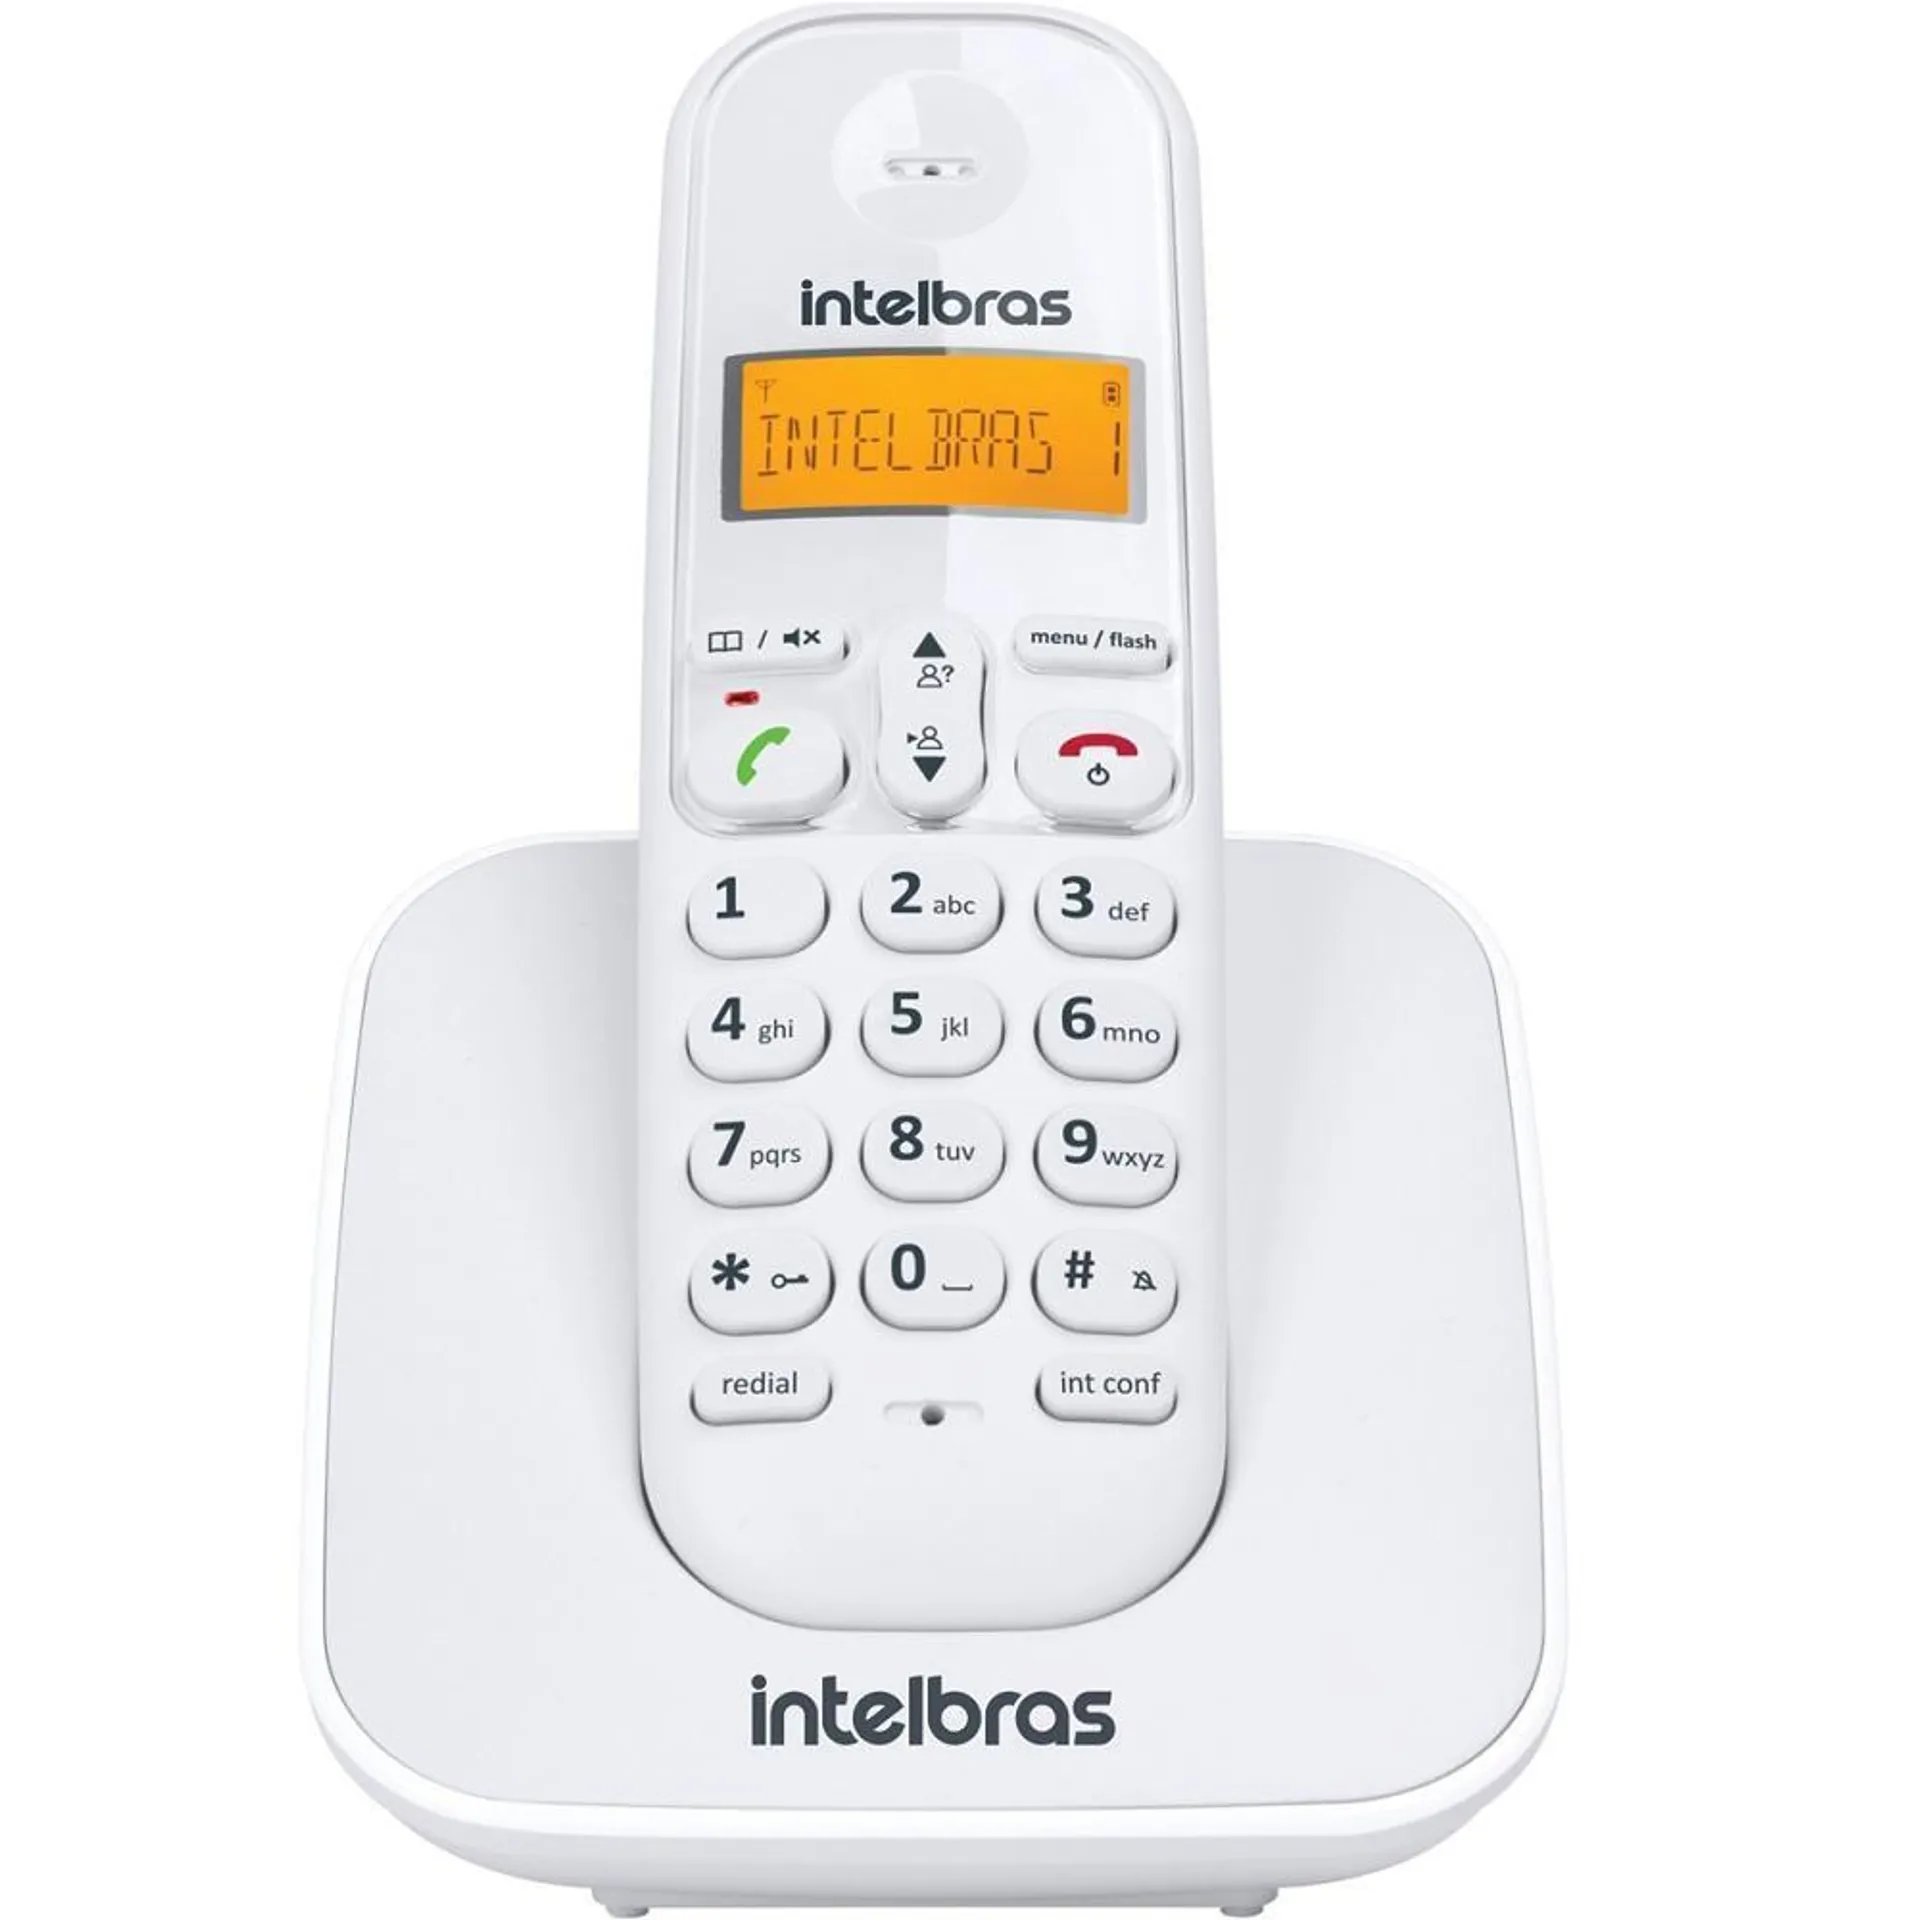 Telefone sem fio com display luminoso branco TS3110, Modelo 4123010, INTELBRAS